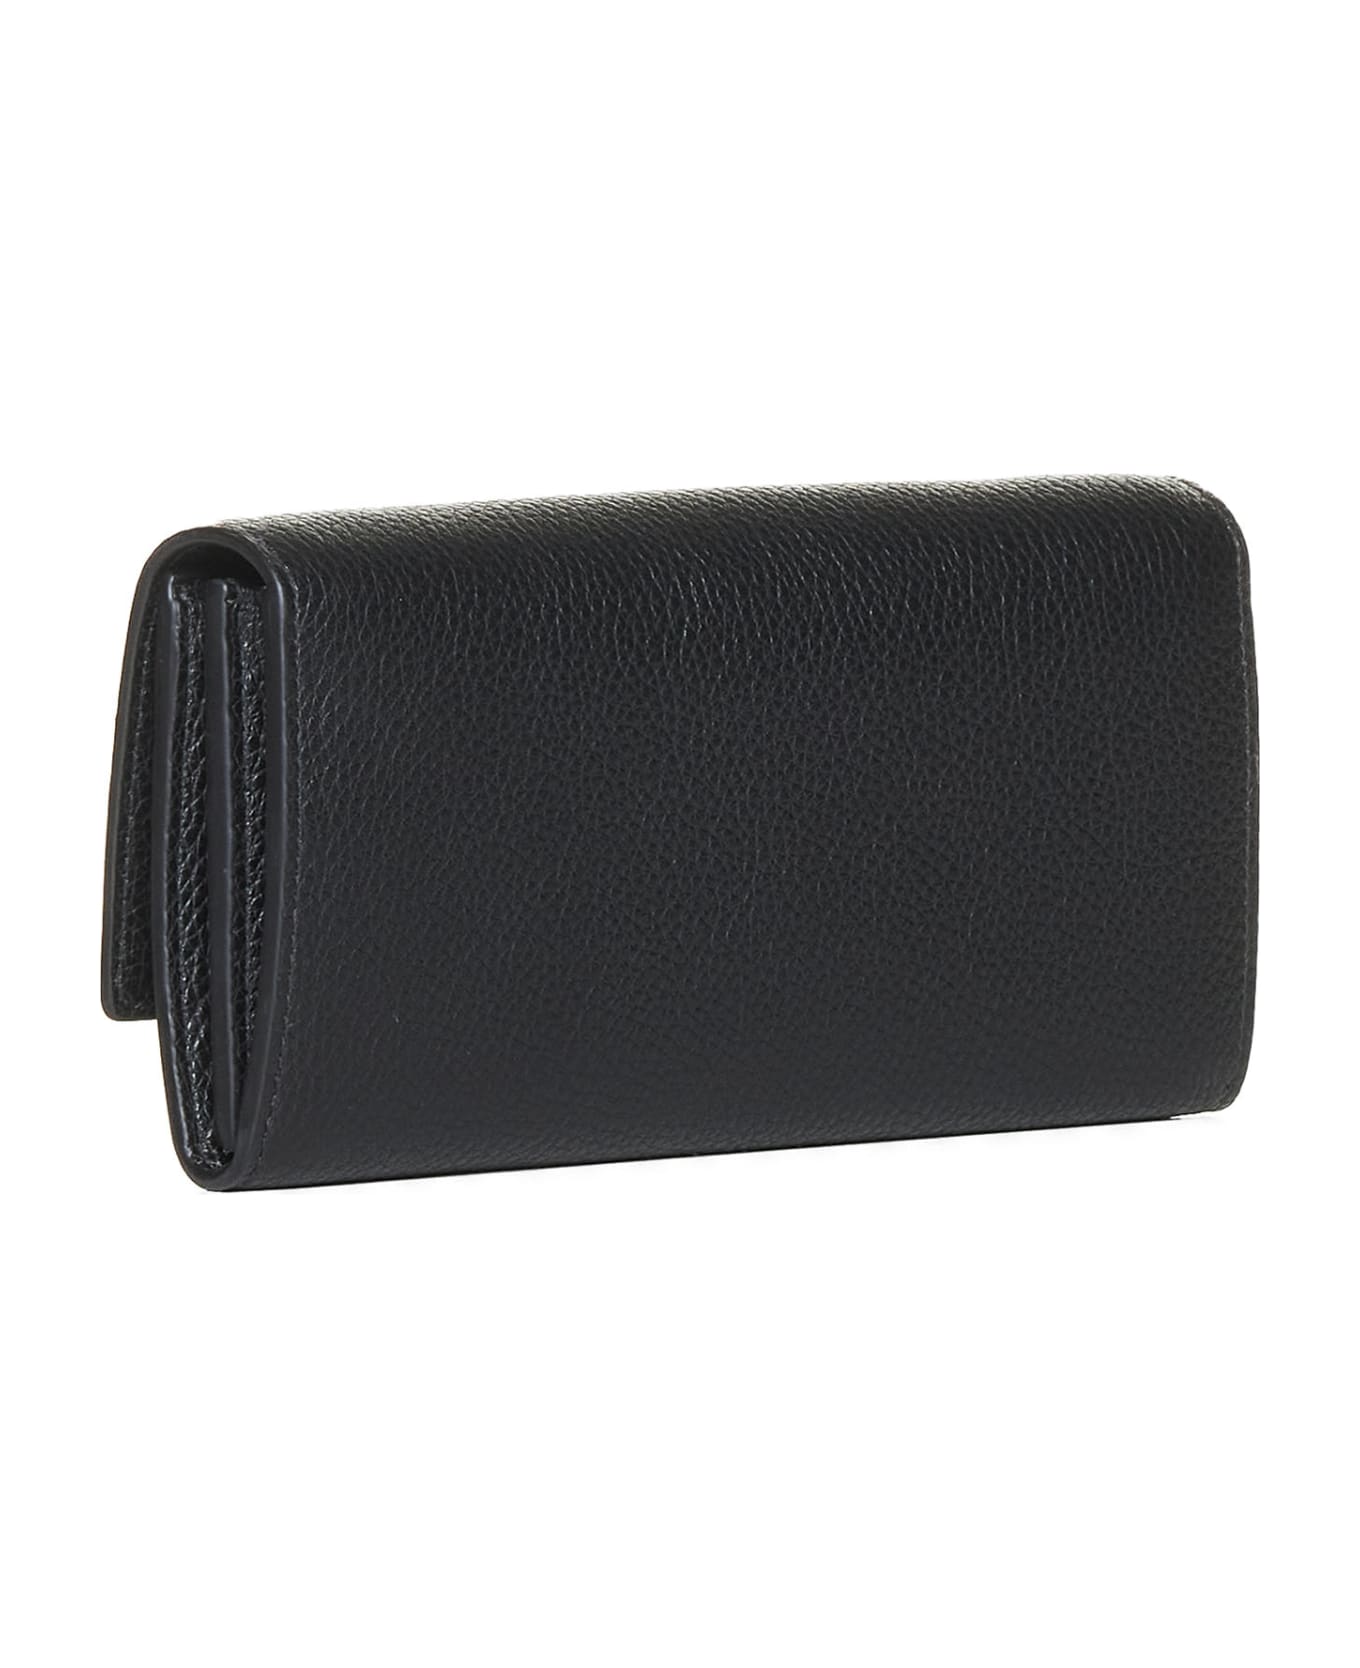 Ferragamo Gancino Soft Leather Wallet On Chain - Nero